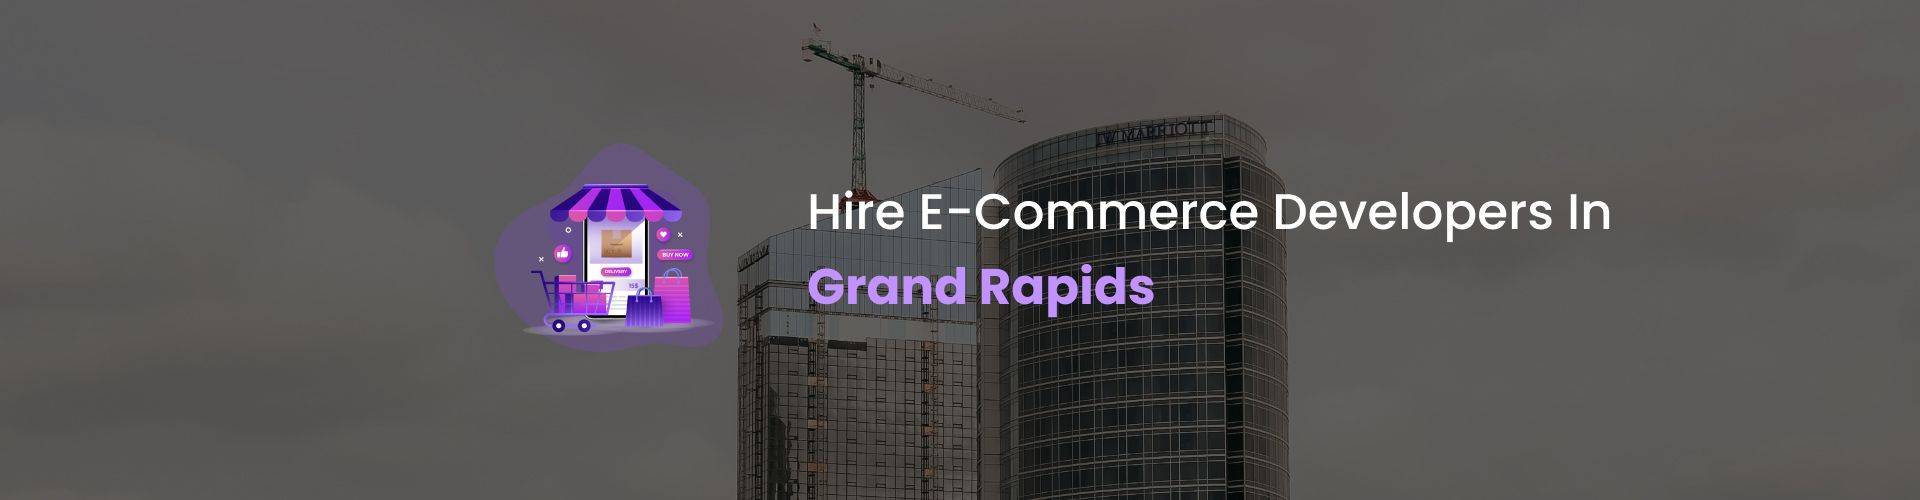 ecommerce developers grand rapids